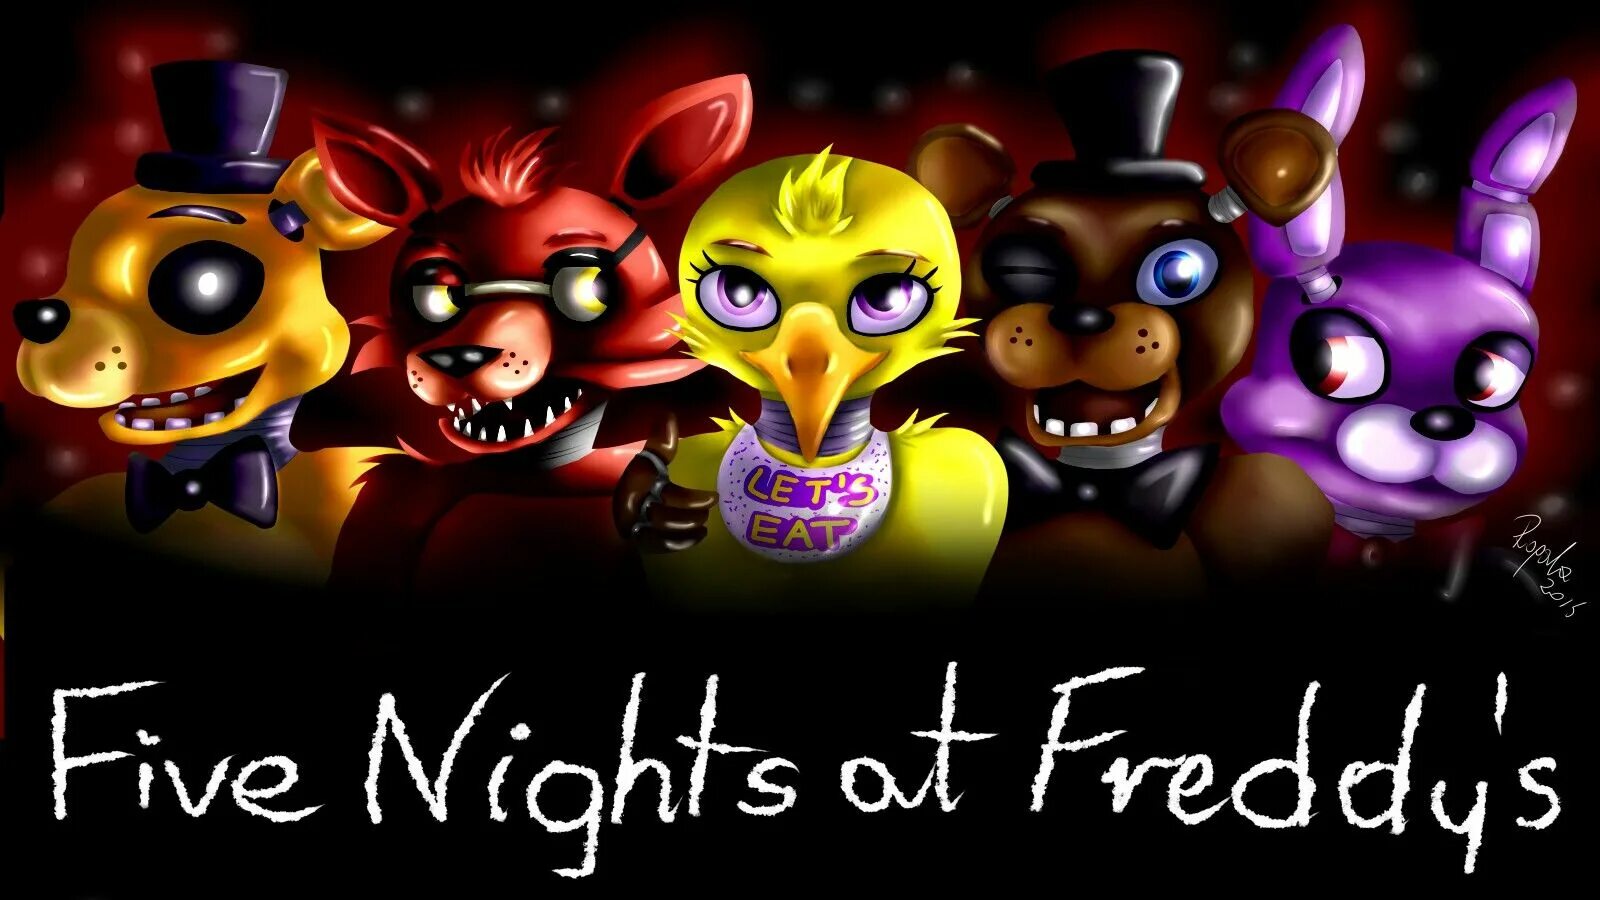 Фиве Нигхт АТ Фредди. ФНАФ 1. Файф Найт Фредди. Five Nights at Freddy's Фредди. Фнаф уно